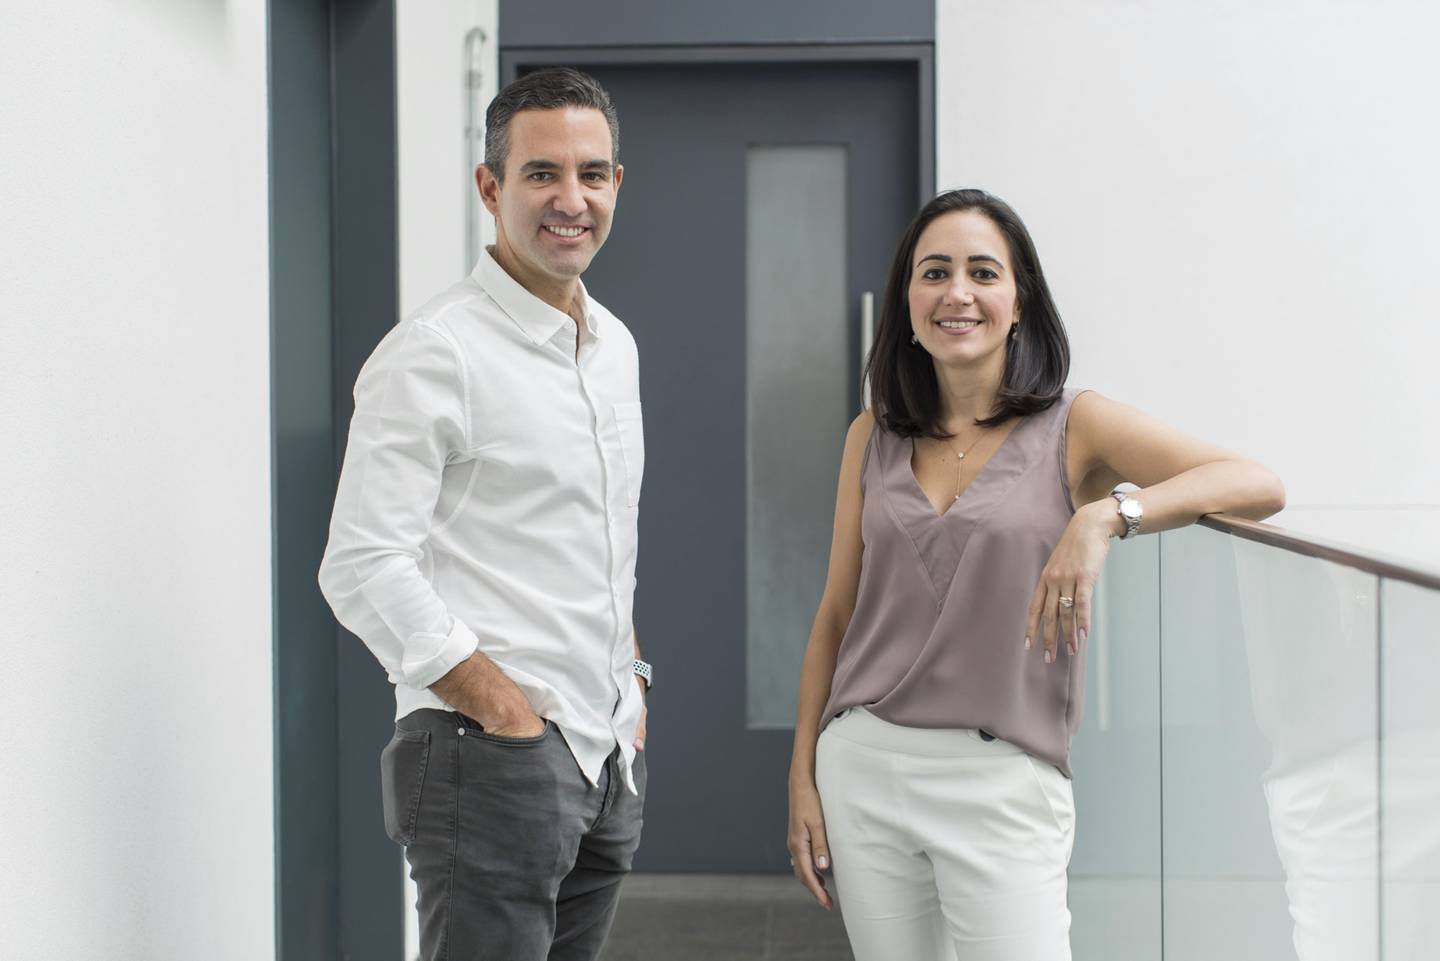 David Velez and Cristina Junqueira, founders of Nubank